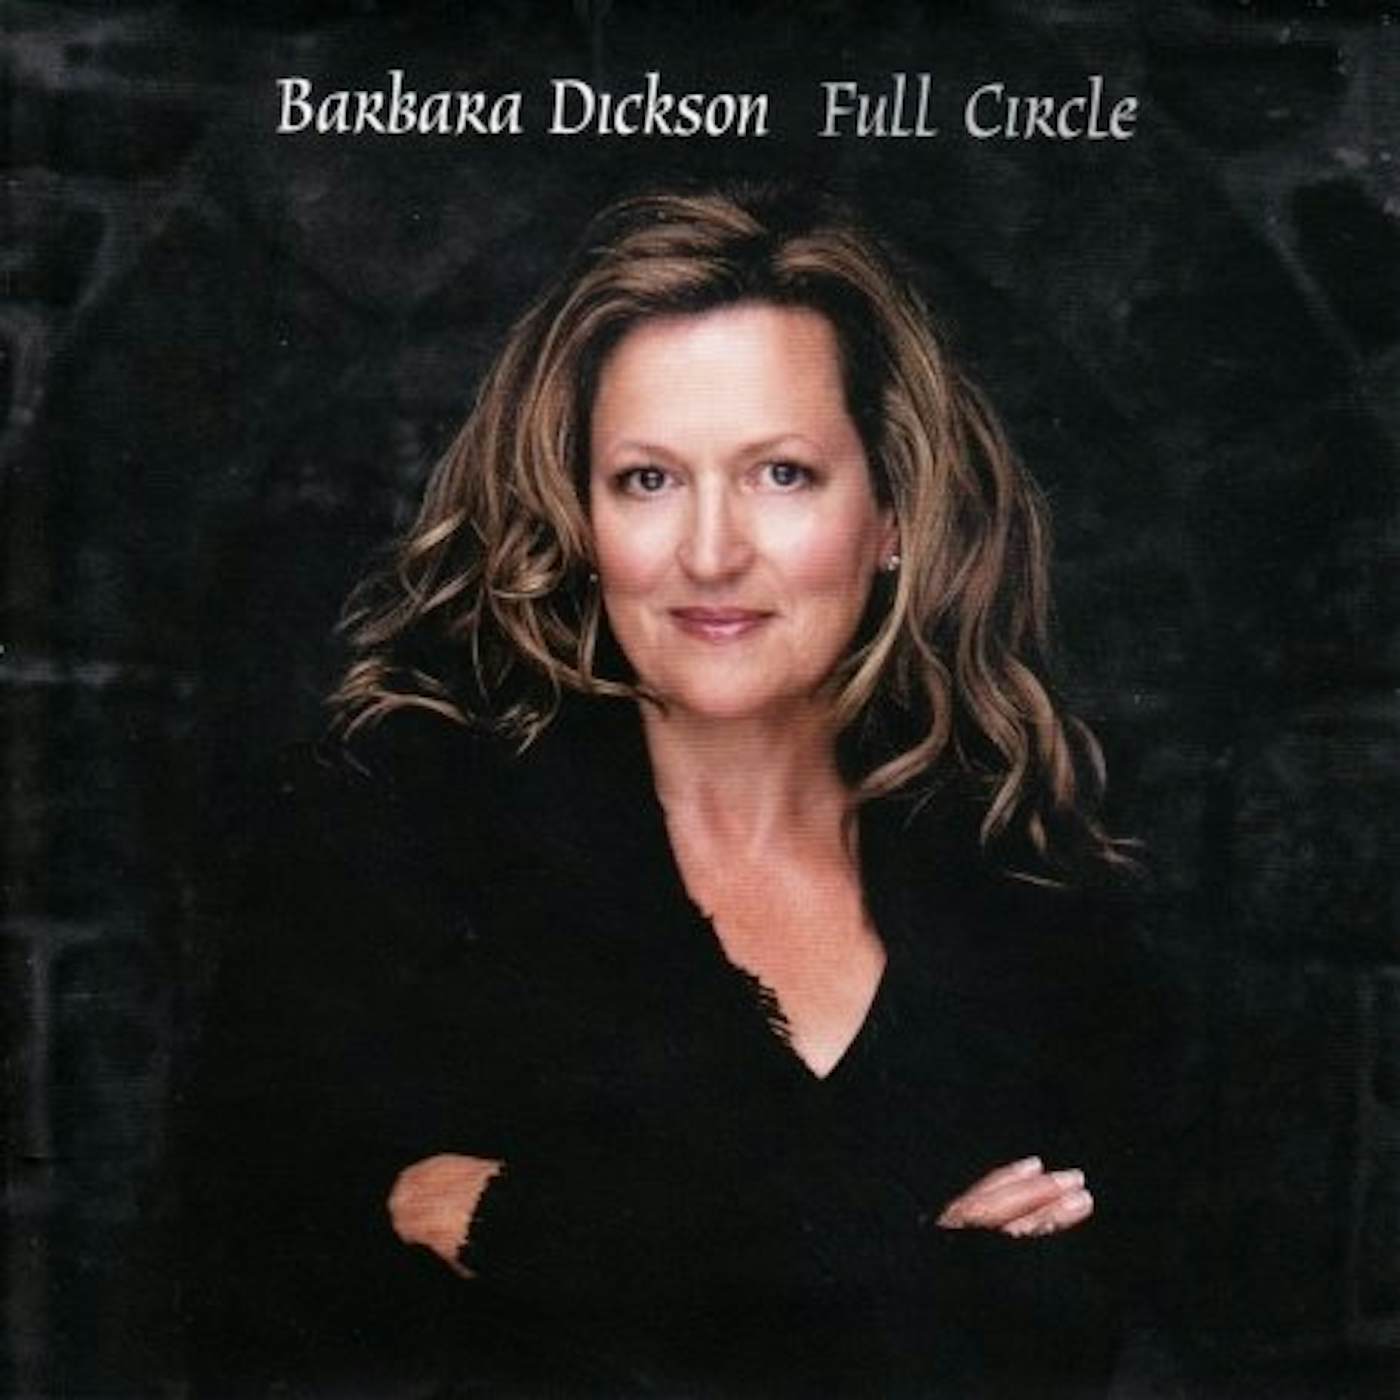 Barbara Dickson FULL CIRCLE CD